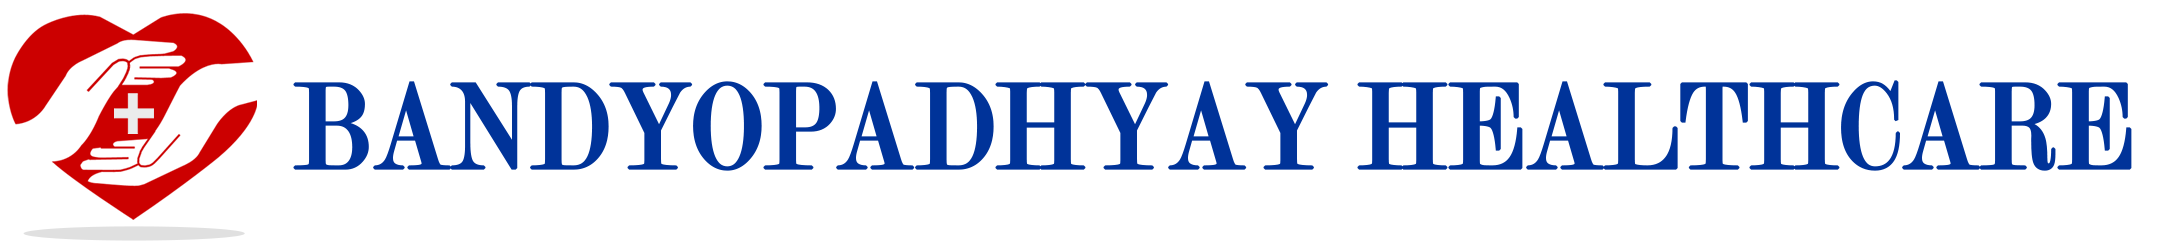 Bandyopadhyay Healthcare Pvt. Ltd.